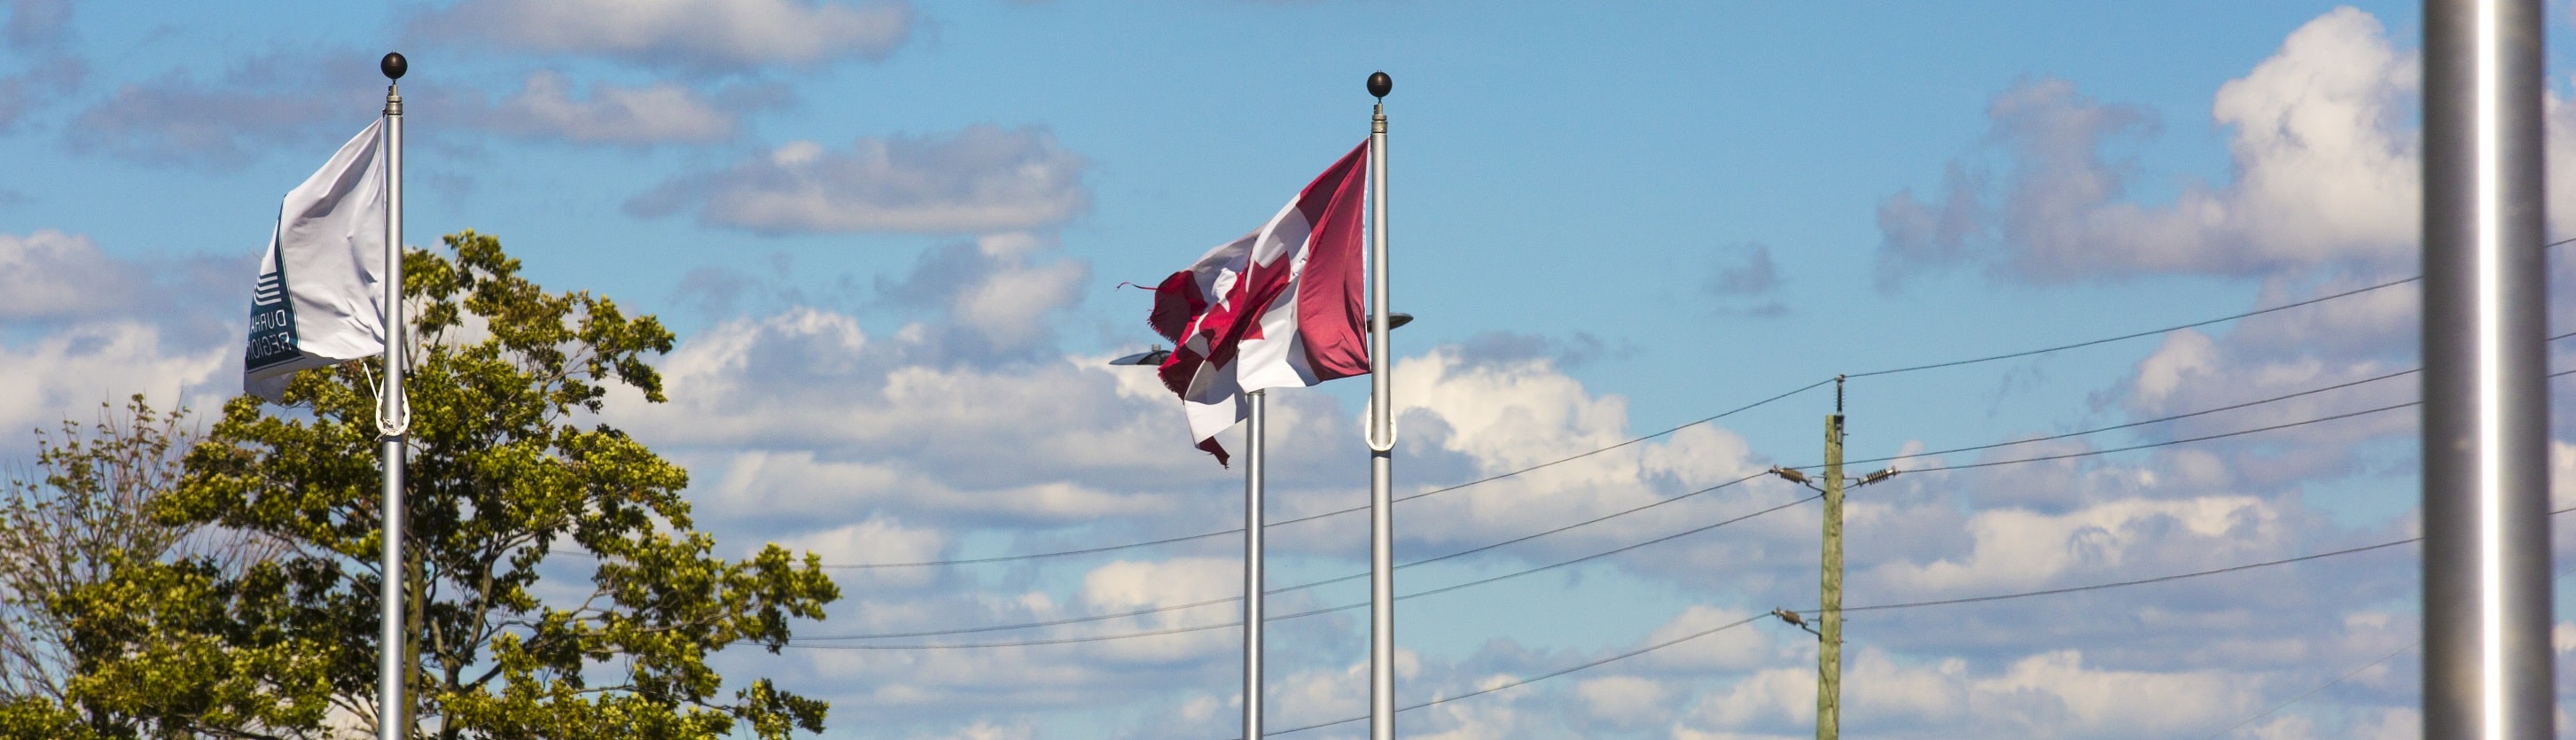 Durham Region and Canadian flag against sky